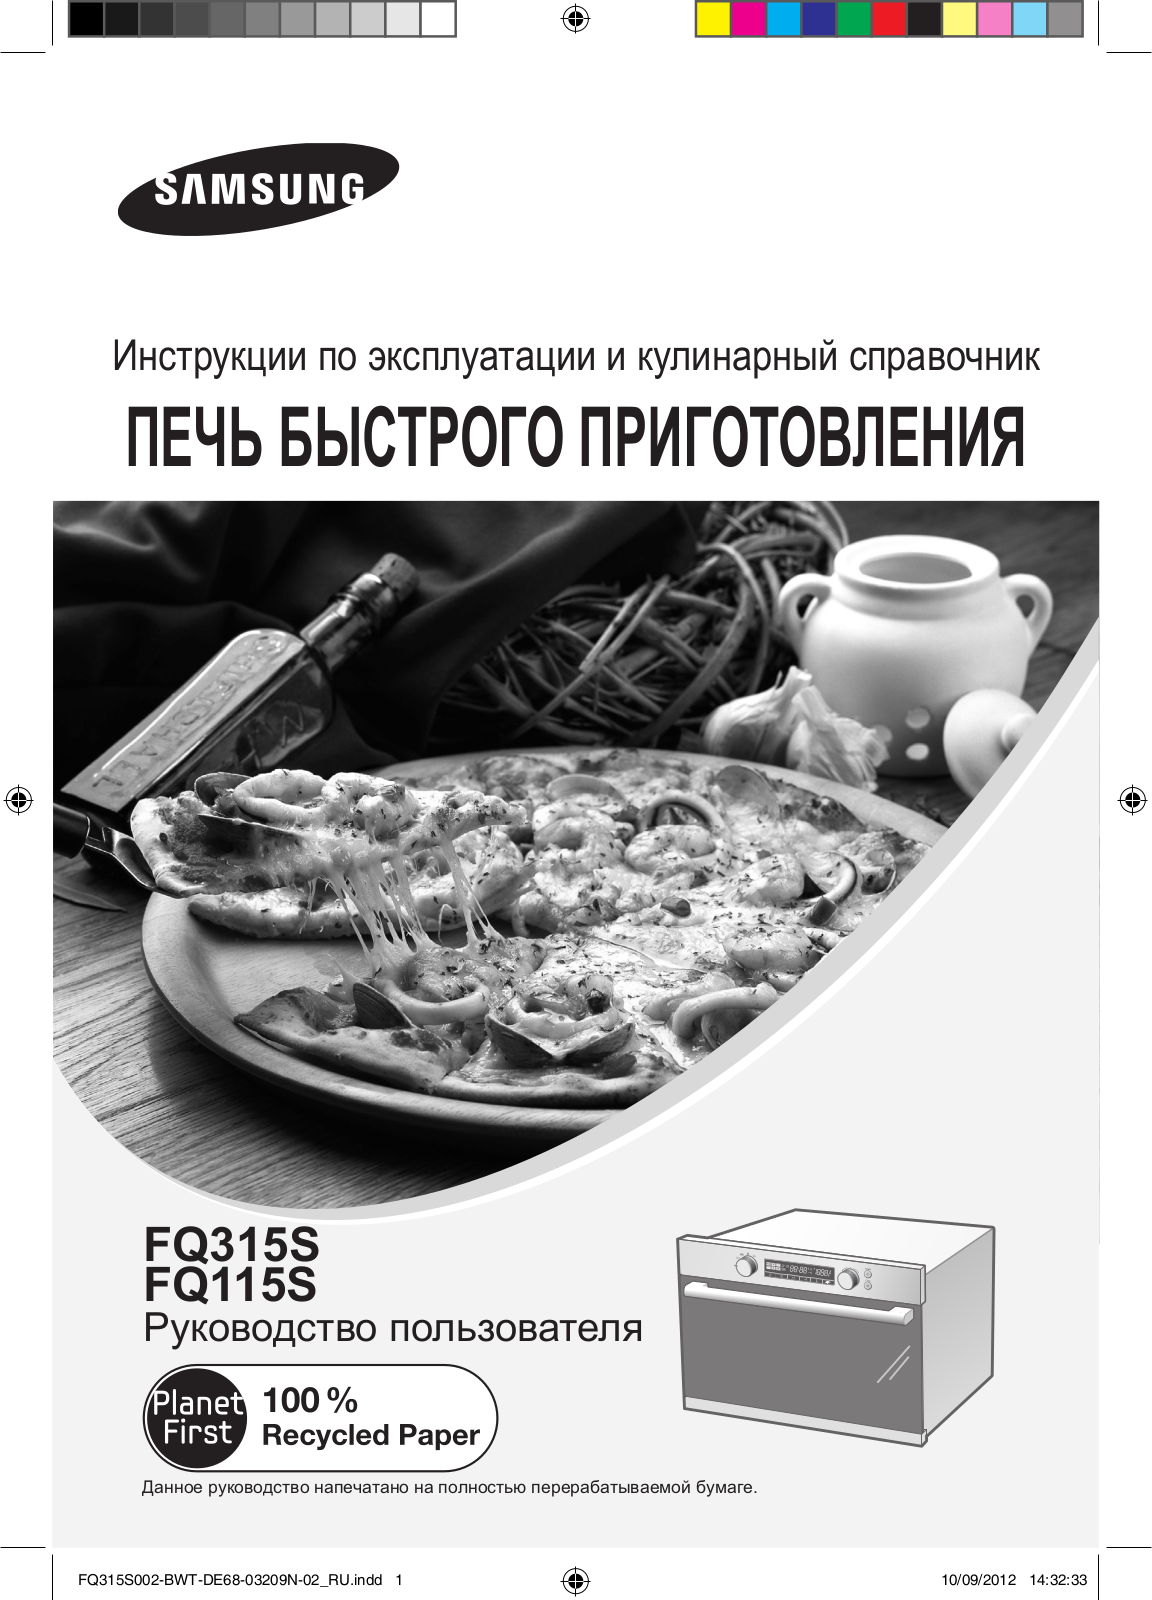 Samsung FQ115S003 User Manual